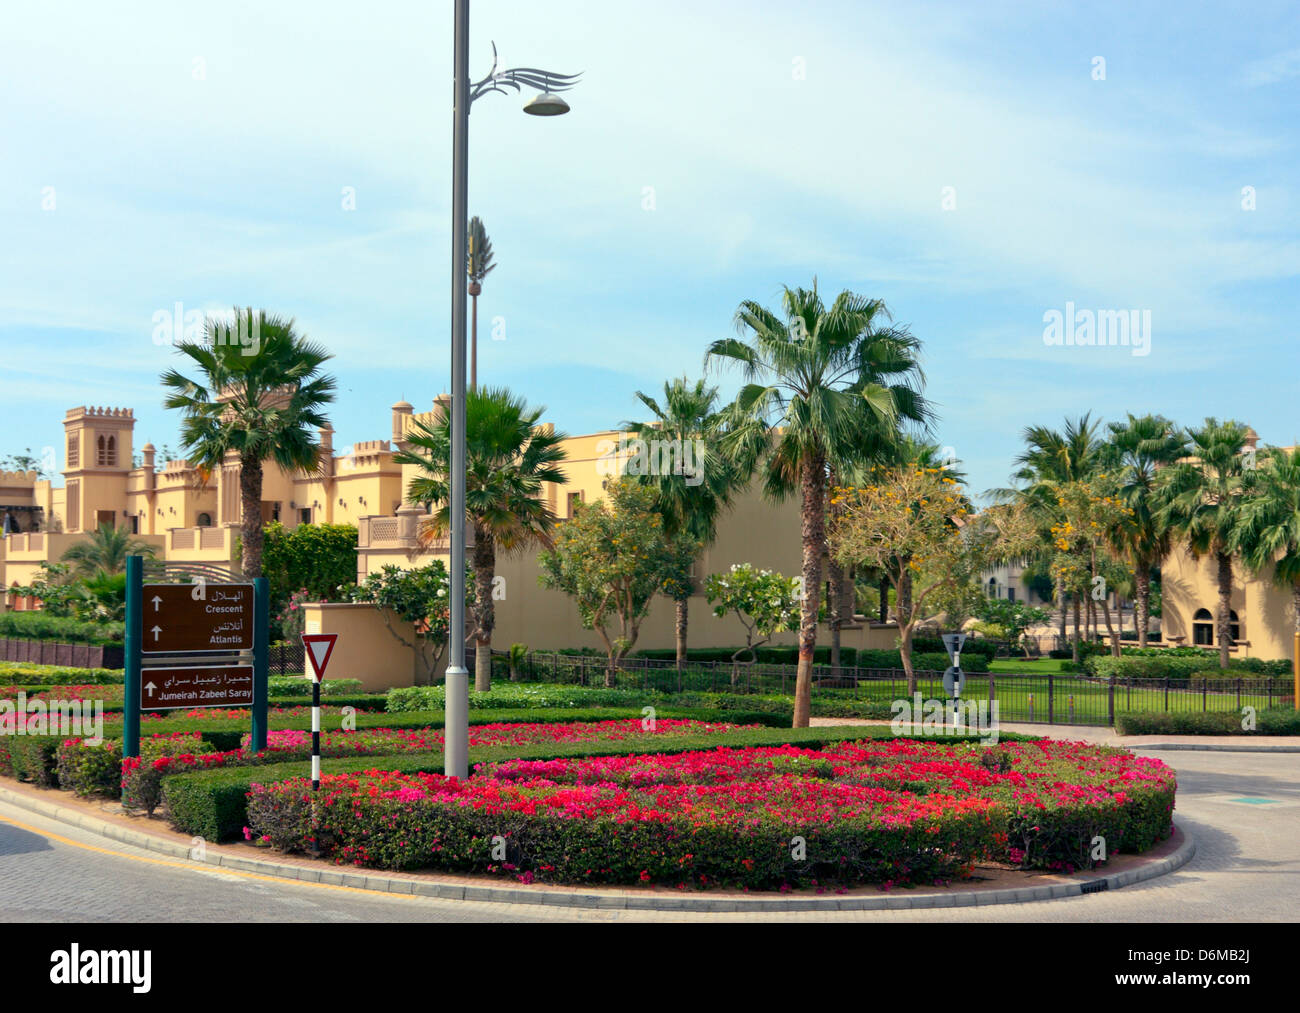 Residential Area on The Palm Jumeirah Artificial Island, Dubai, United Arab Emirates Stock Photo